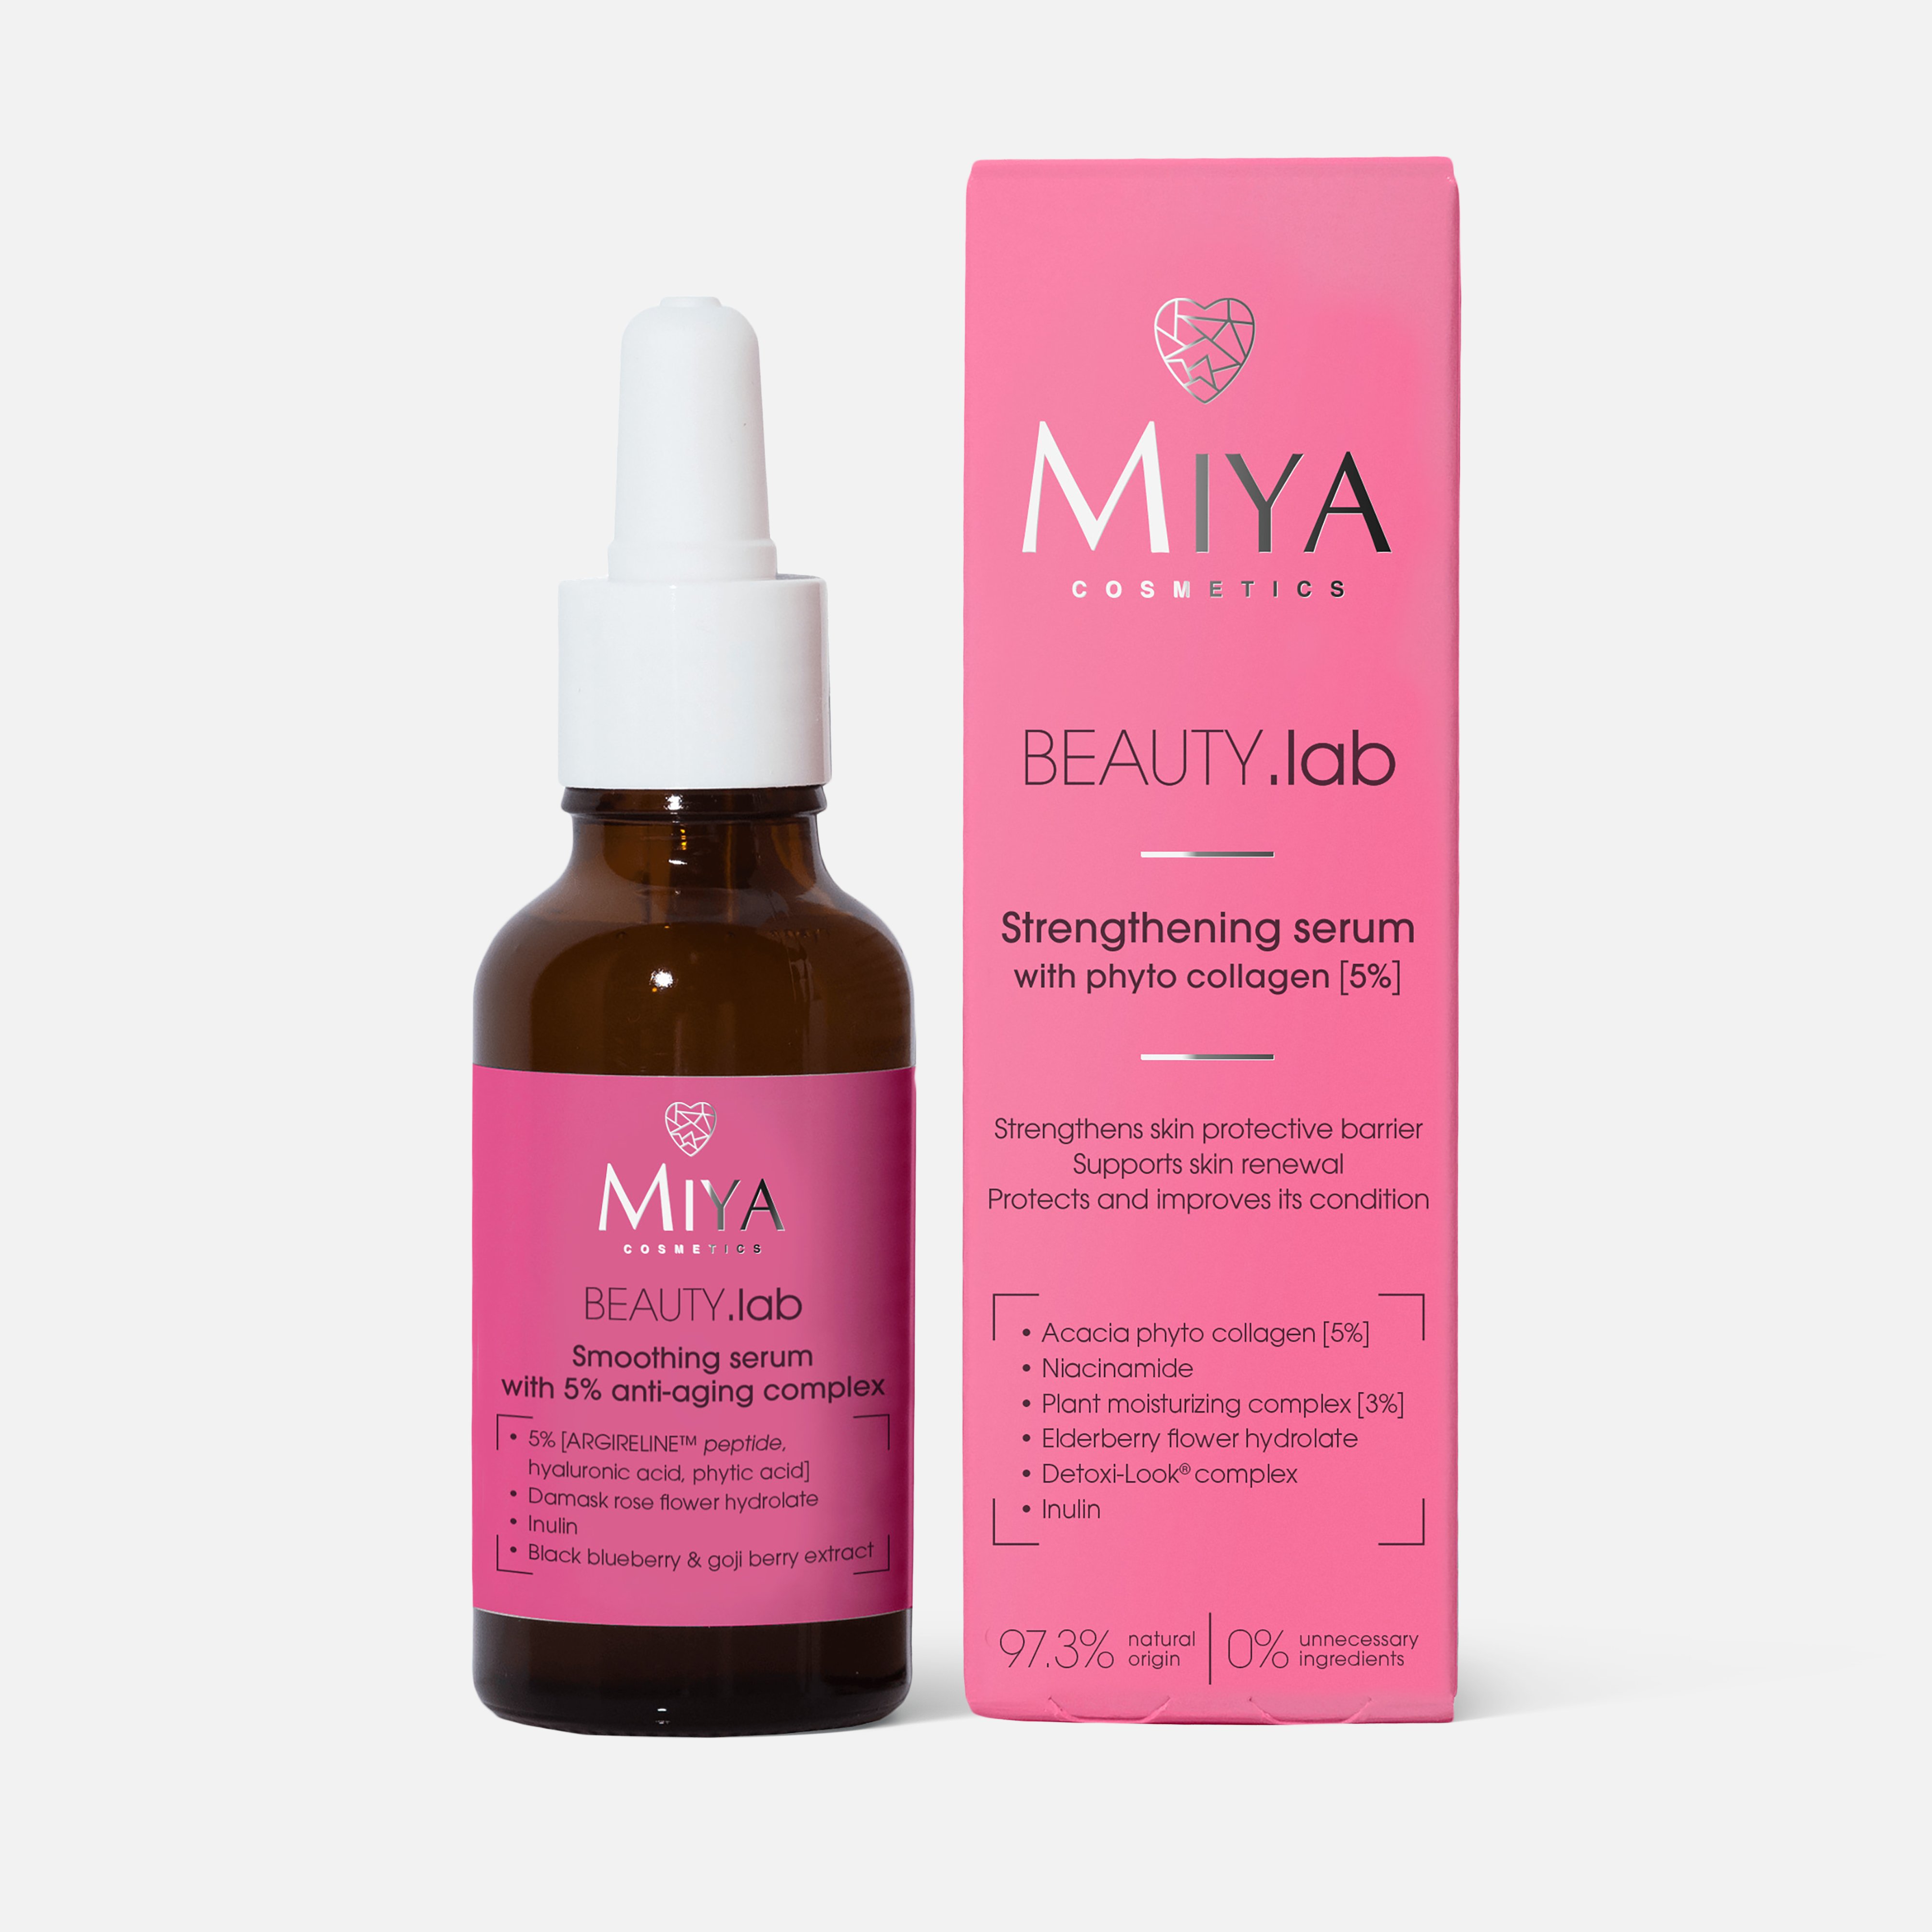 Сыворотка для лица Miya cosmetics Beauty.Lab Smoothing Anti-aging Complex 5%, 30 мл сыворотка для лица для мезороллера matrigen complex c 2 амп х 4 мл bbg250 2